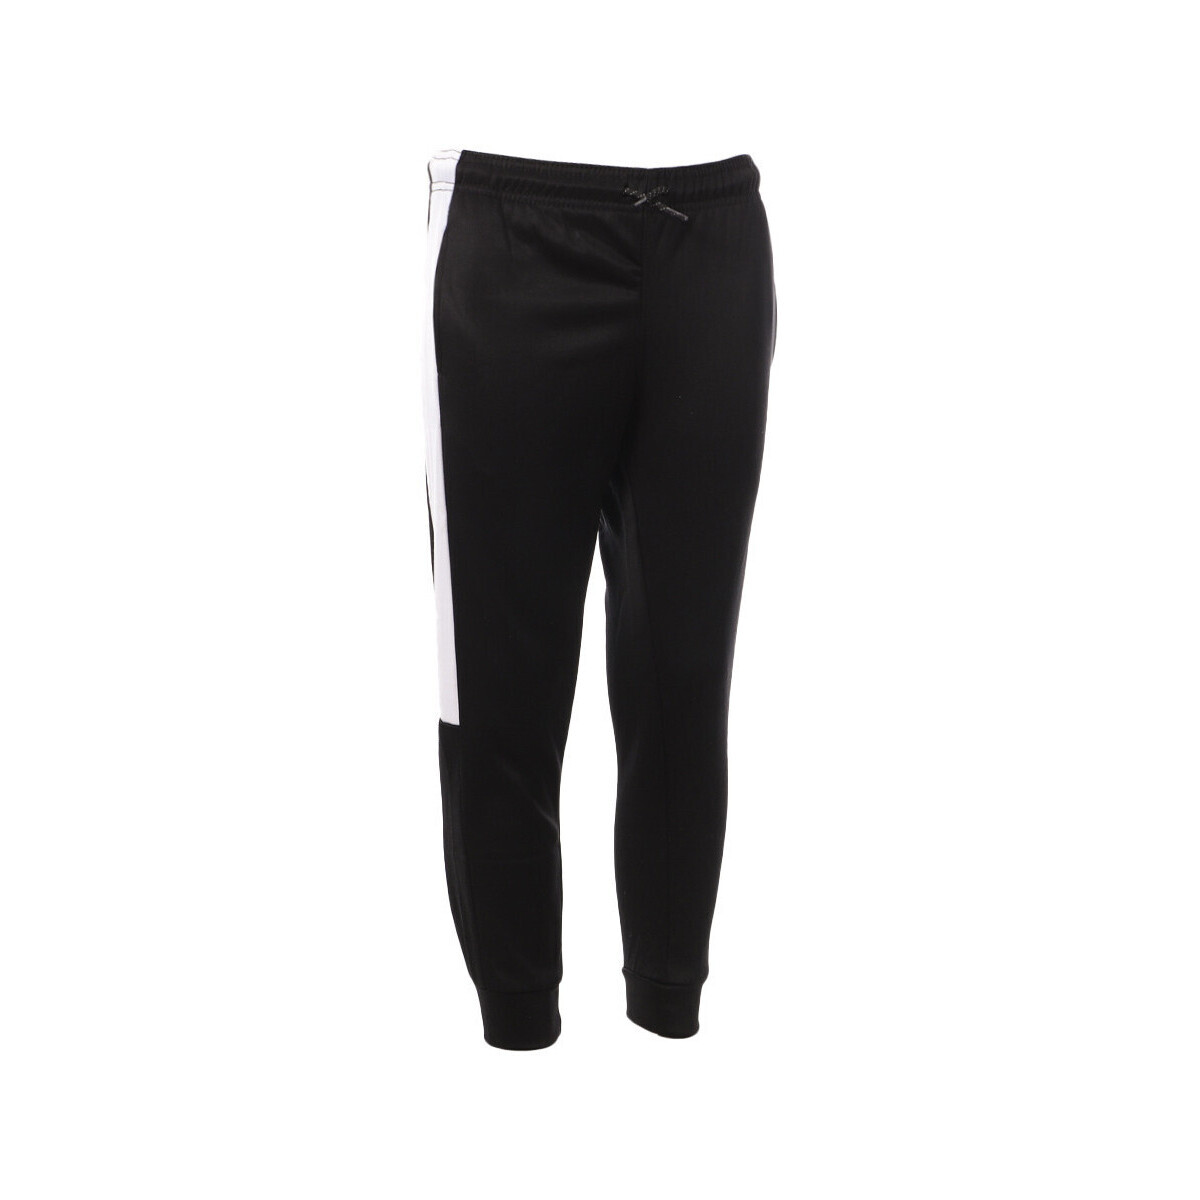 Vêtements Garçon Pantalons de survêtement Reebok Sport E89484RBI Noir